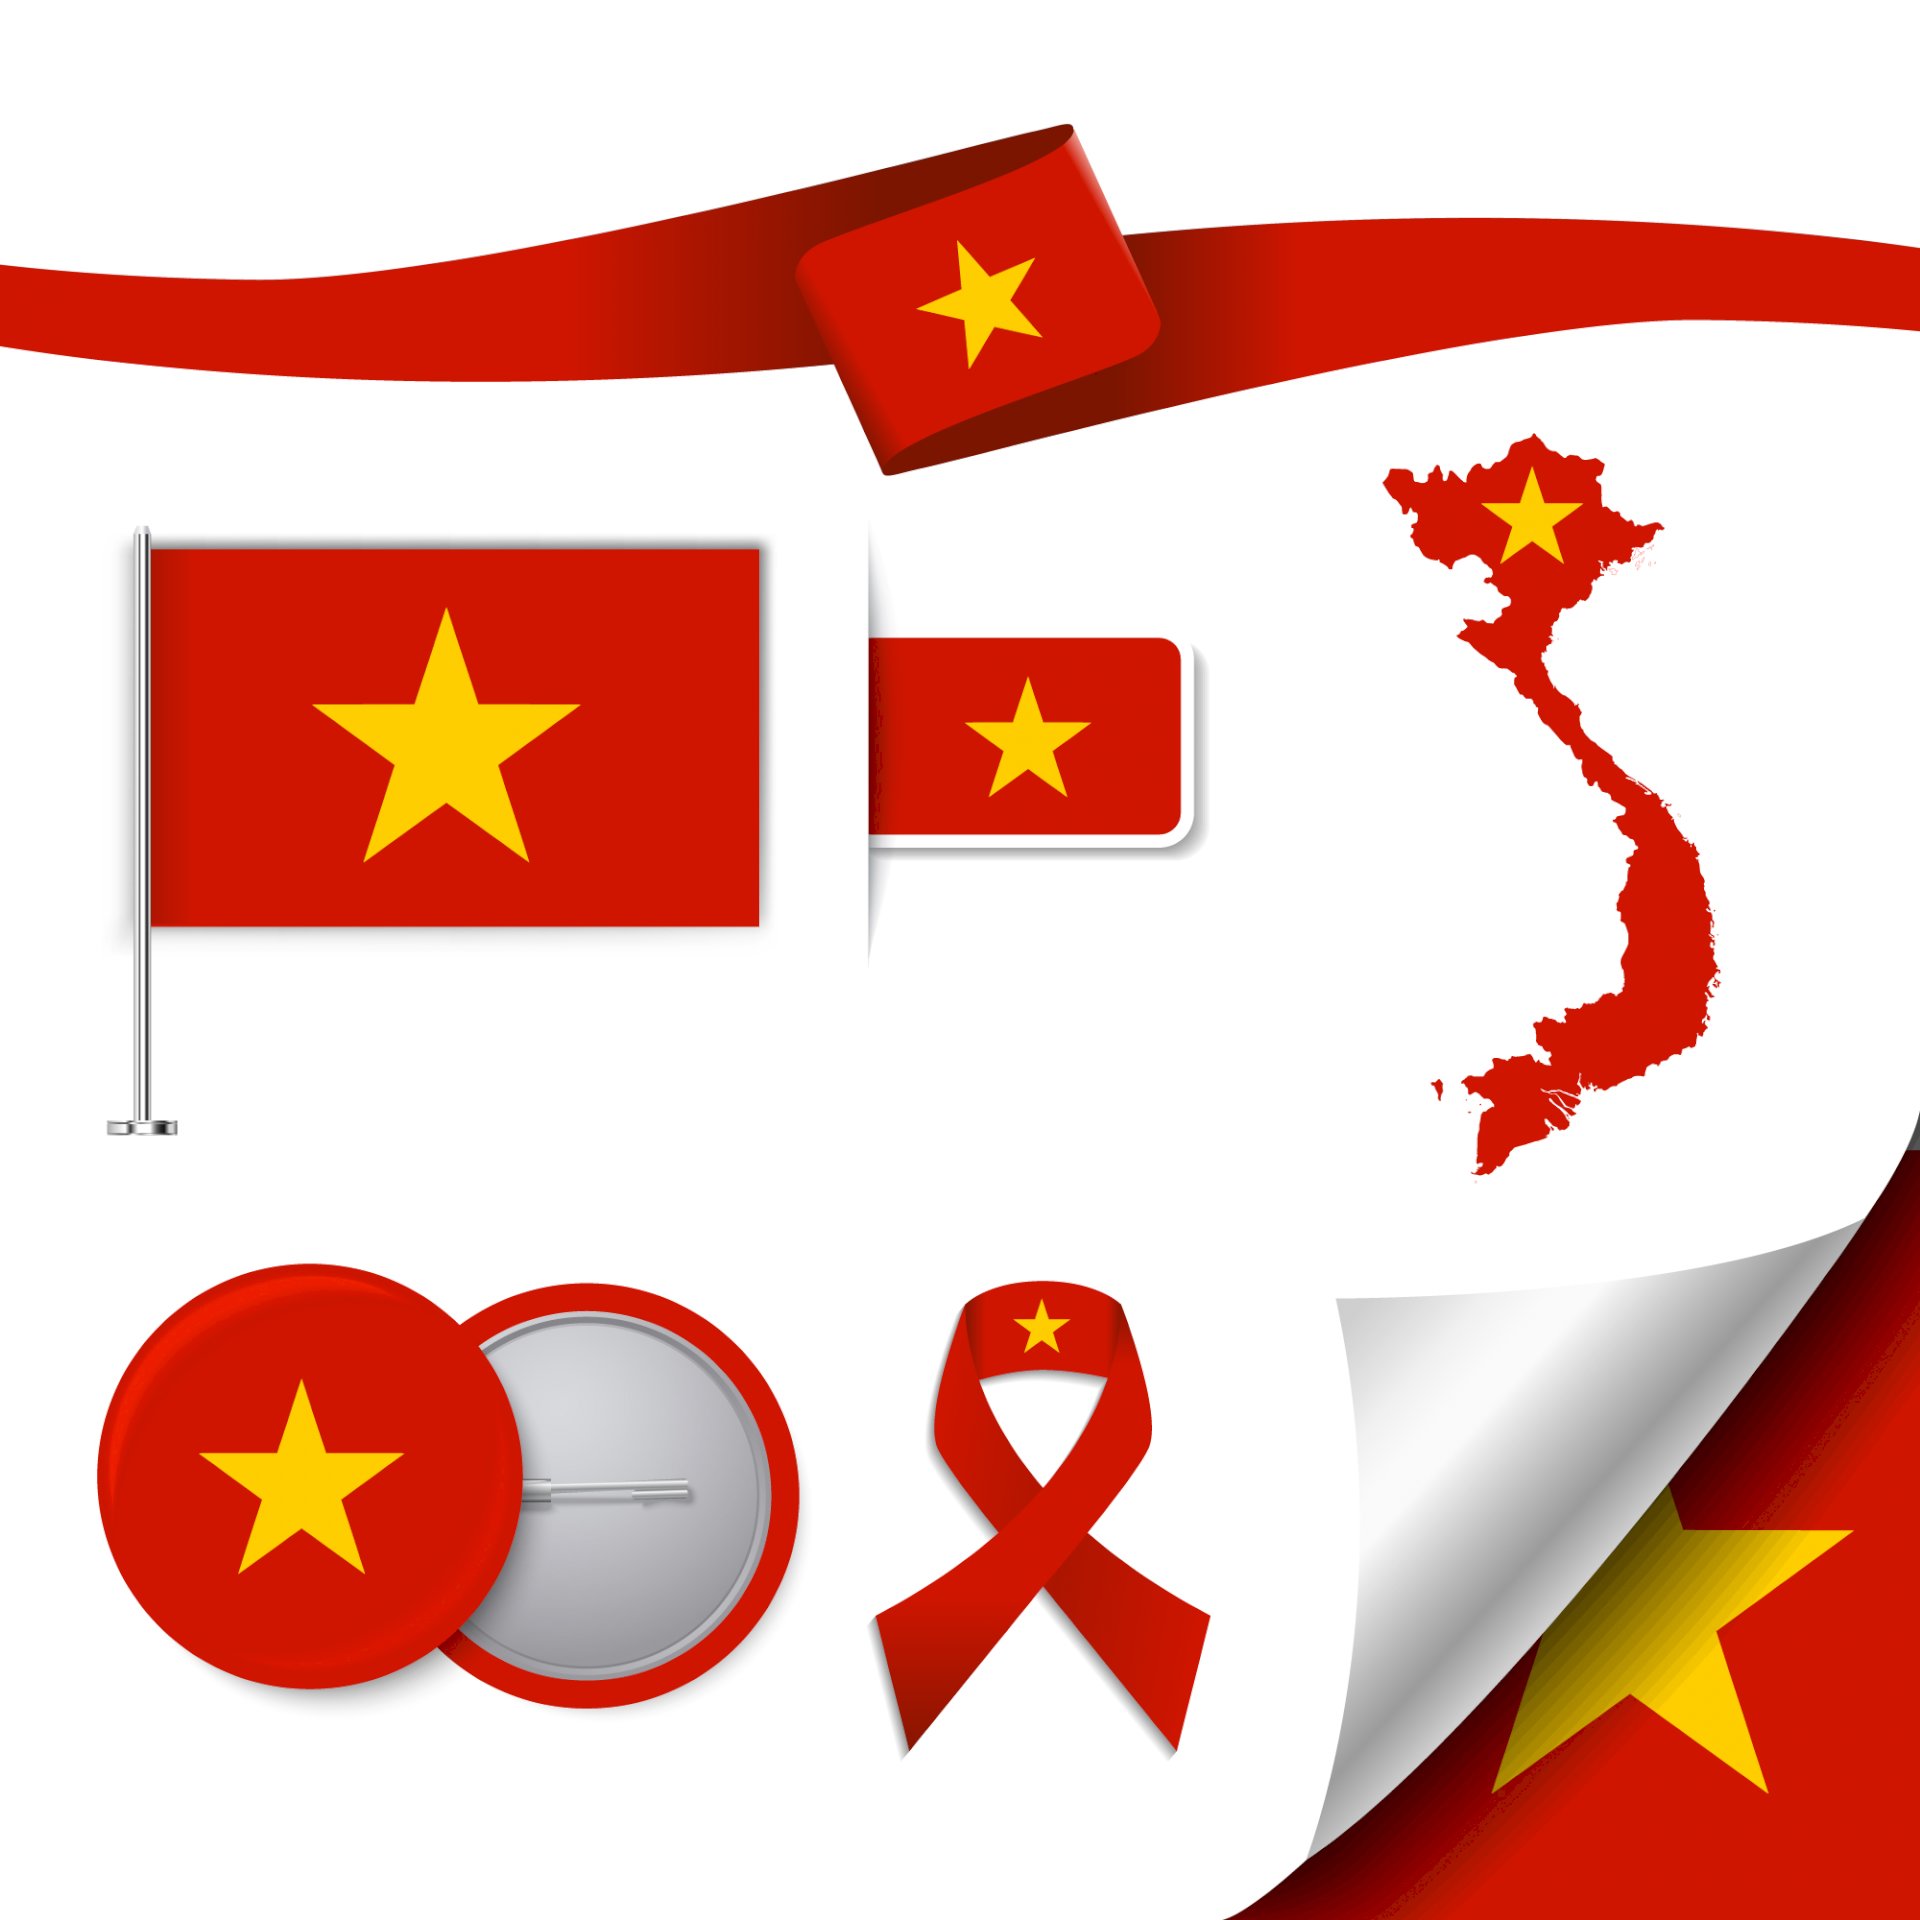 Tải mẫu logo lá cờ Việt Nam file vector AI, EPS, JPEG, PNG, SVG